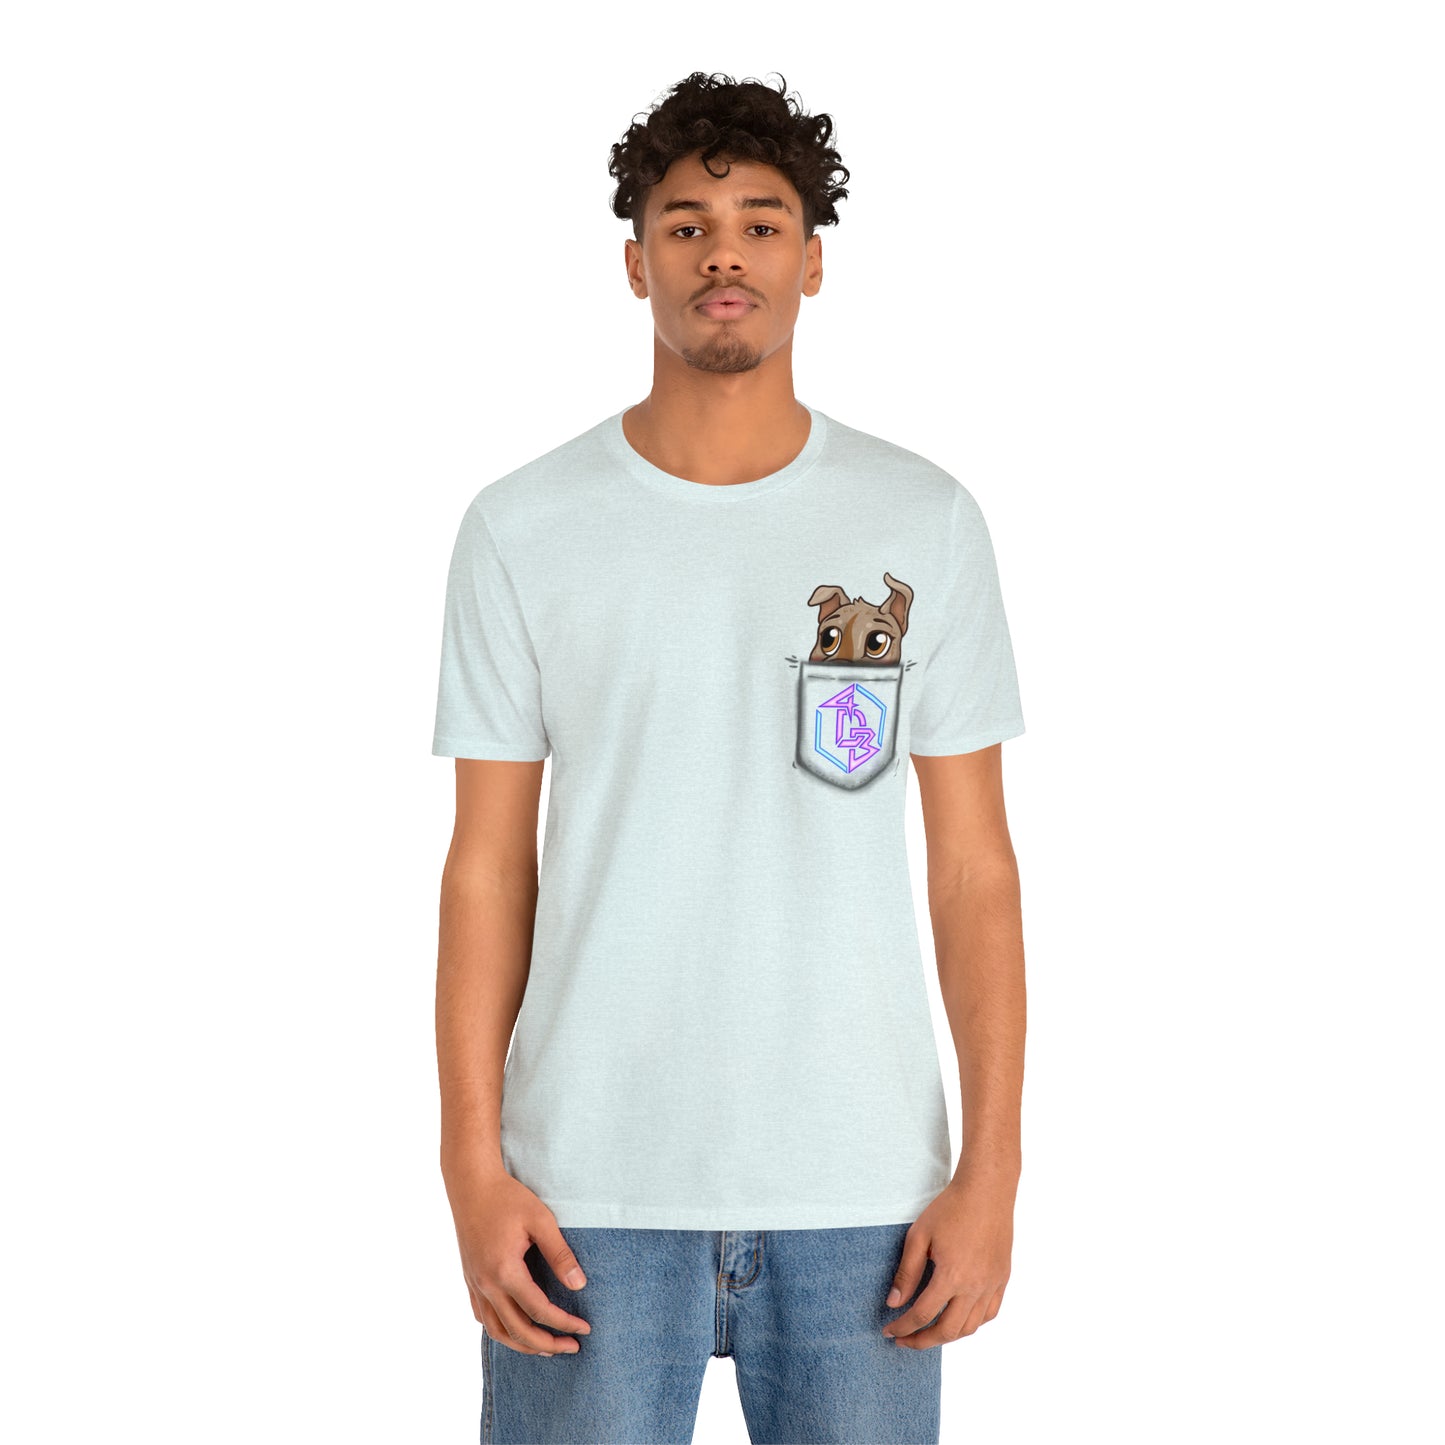 The Official 4DavidBlue Stream Shirt - Short Sleeve Tee (Multiple Color Options)